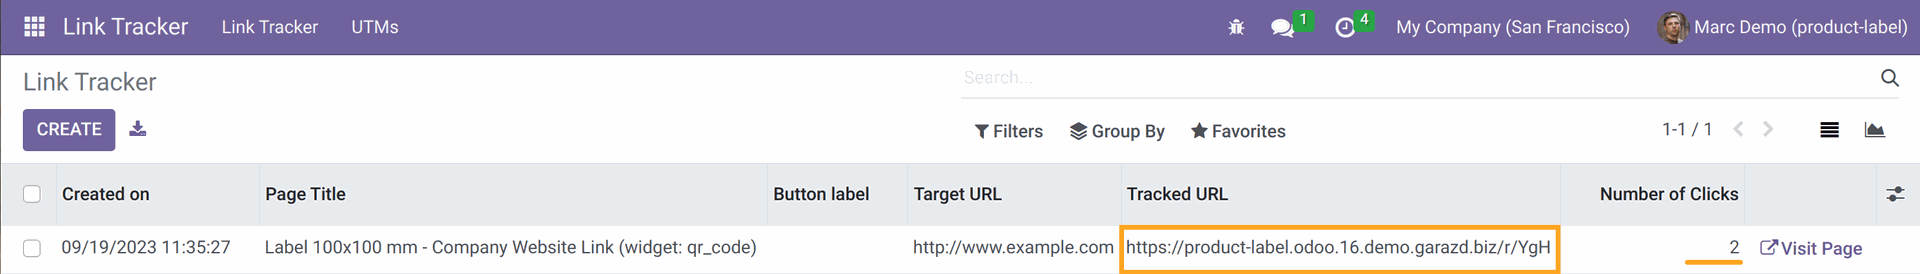 Odoo Product Label Link Tracker shorten URL in 17.0